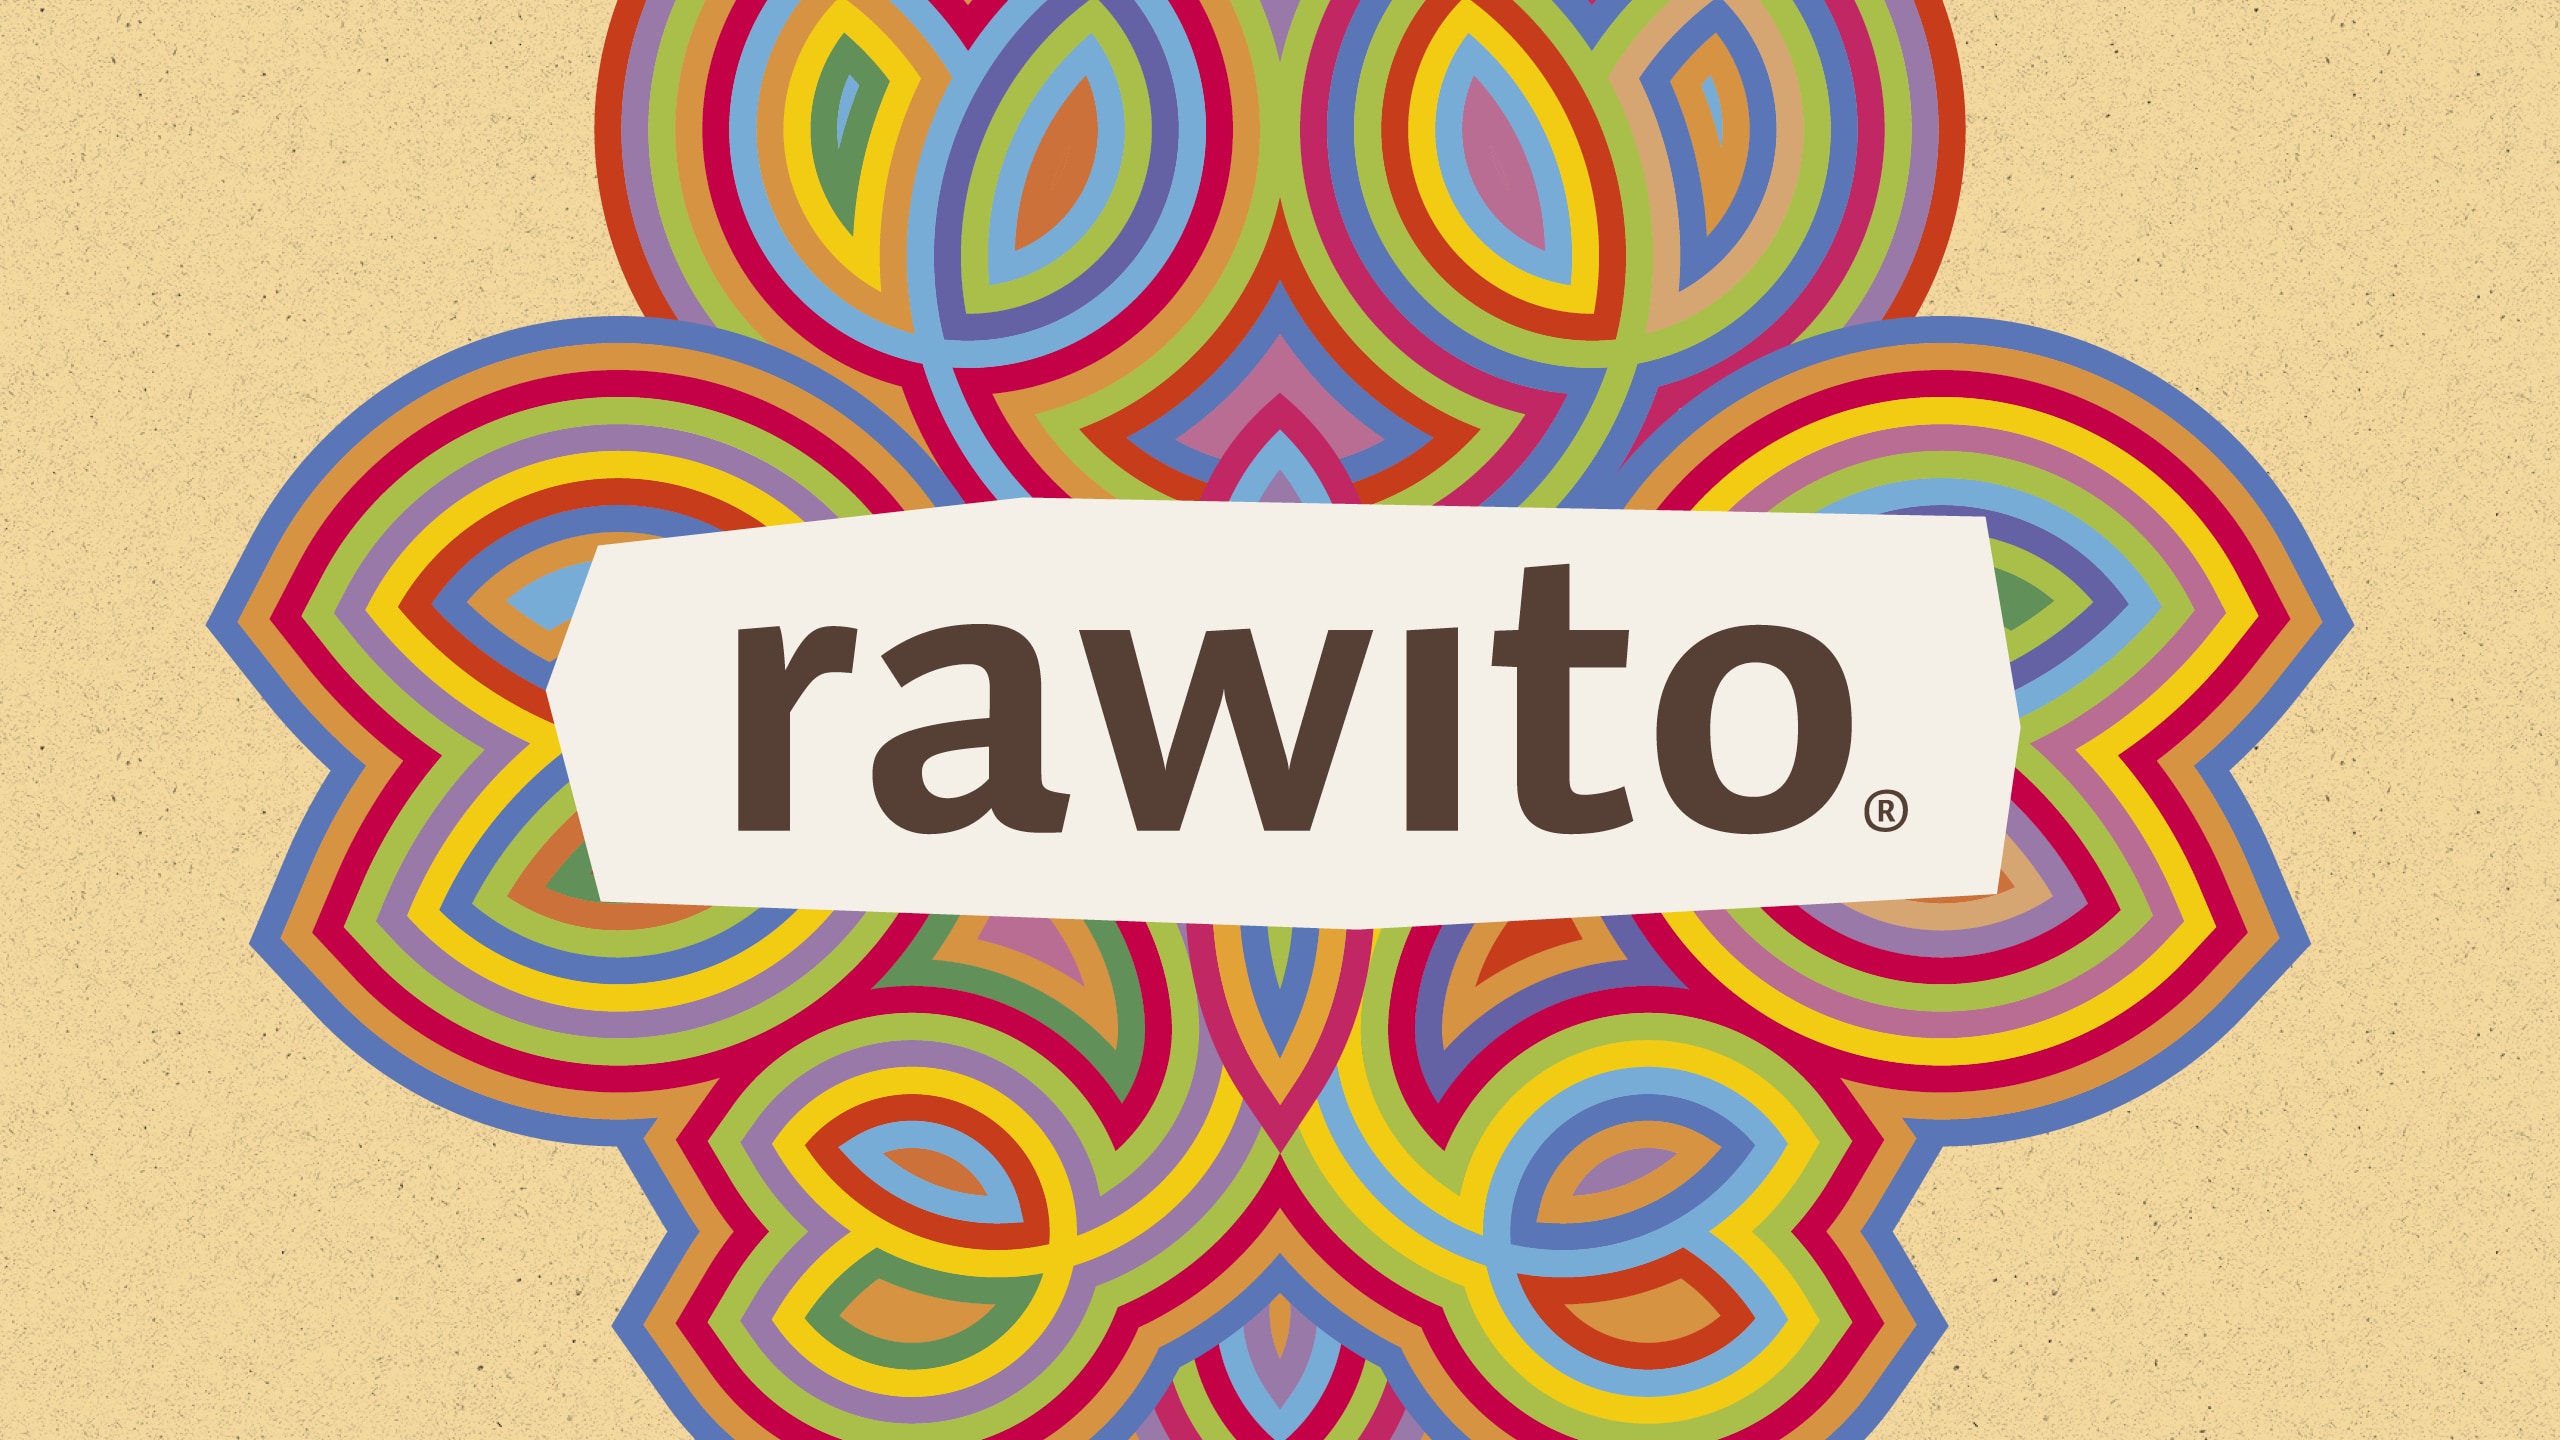 Rawito_Brand_1